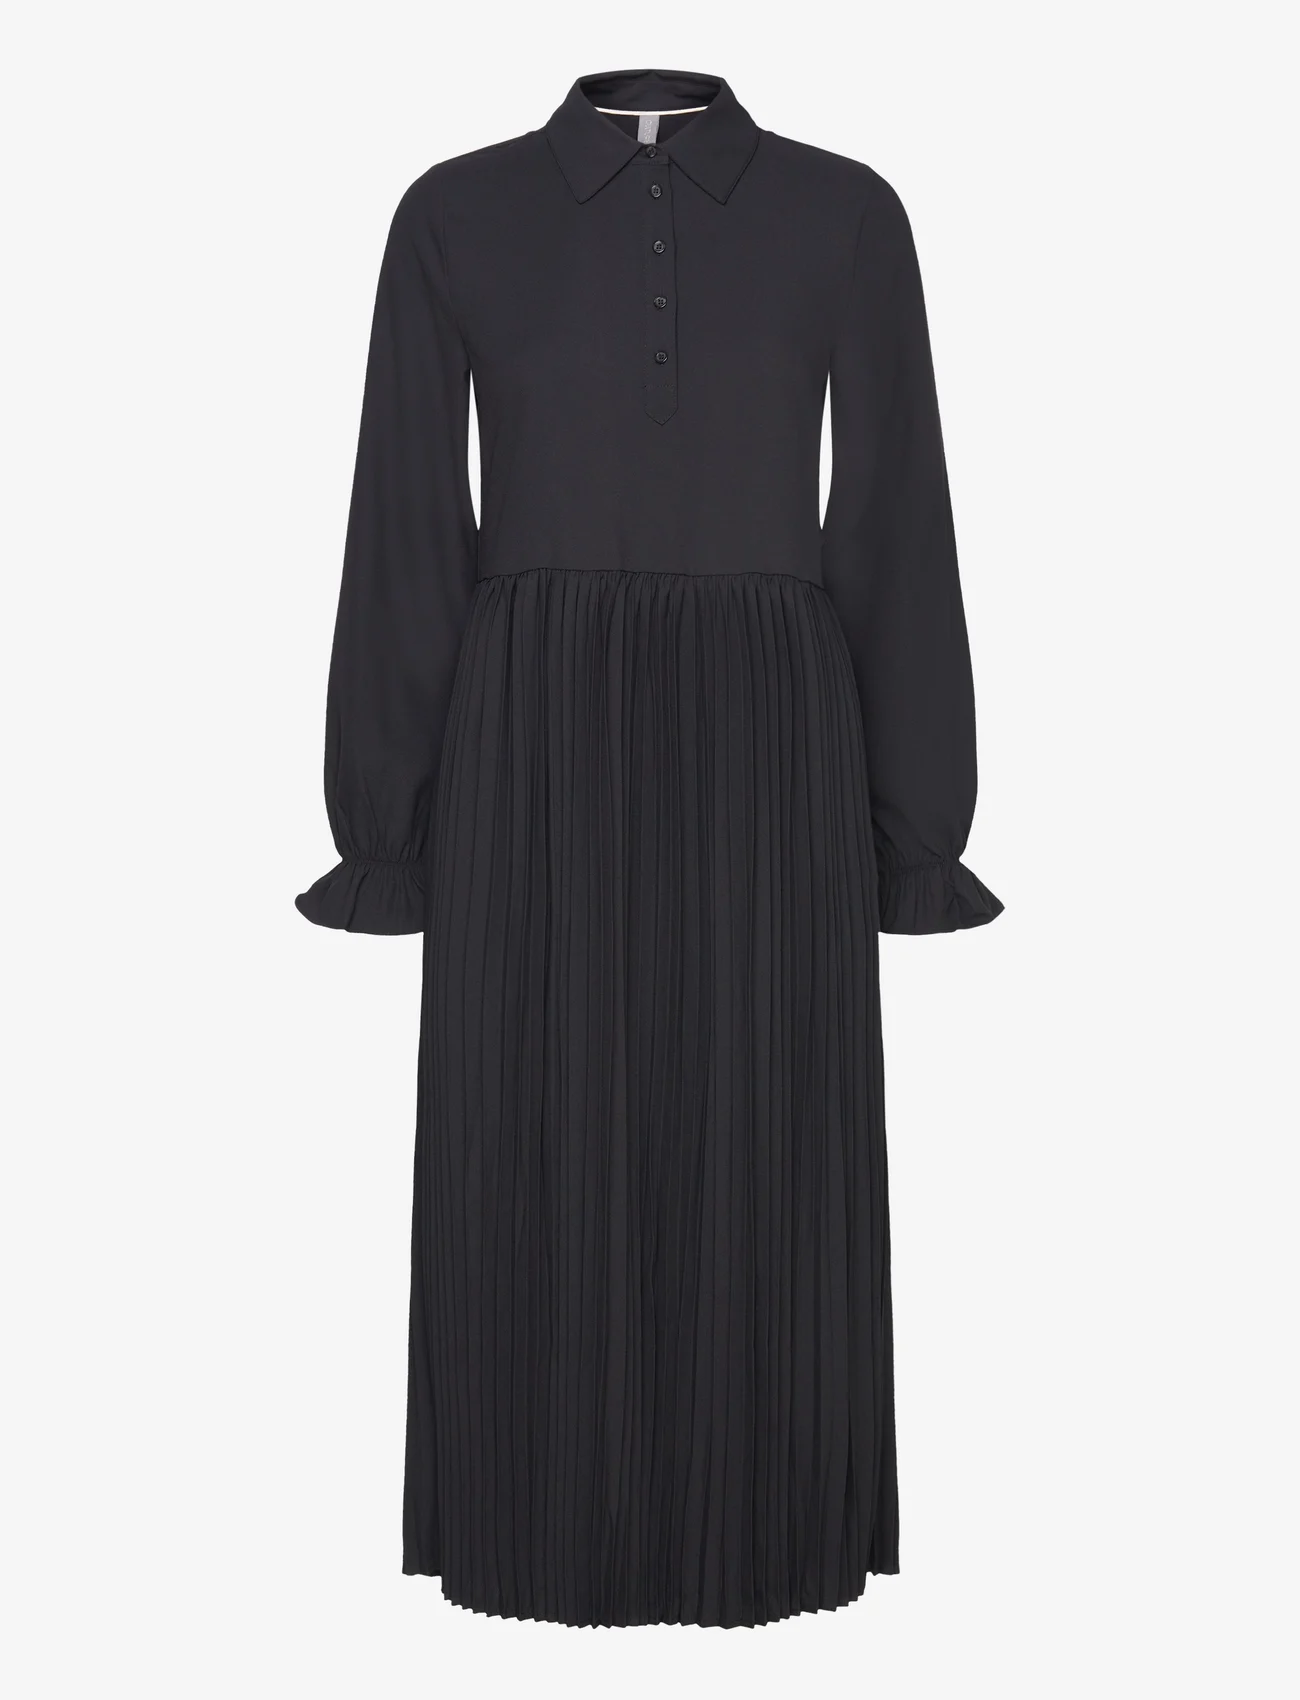 Culture - CUbetty Dress - skjortekjoler - black solid - 0